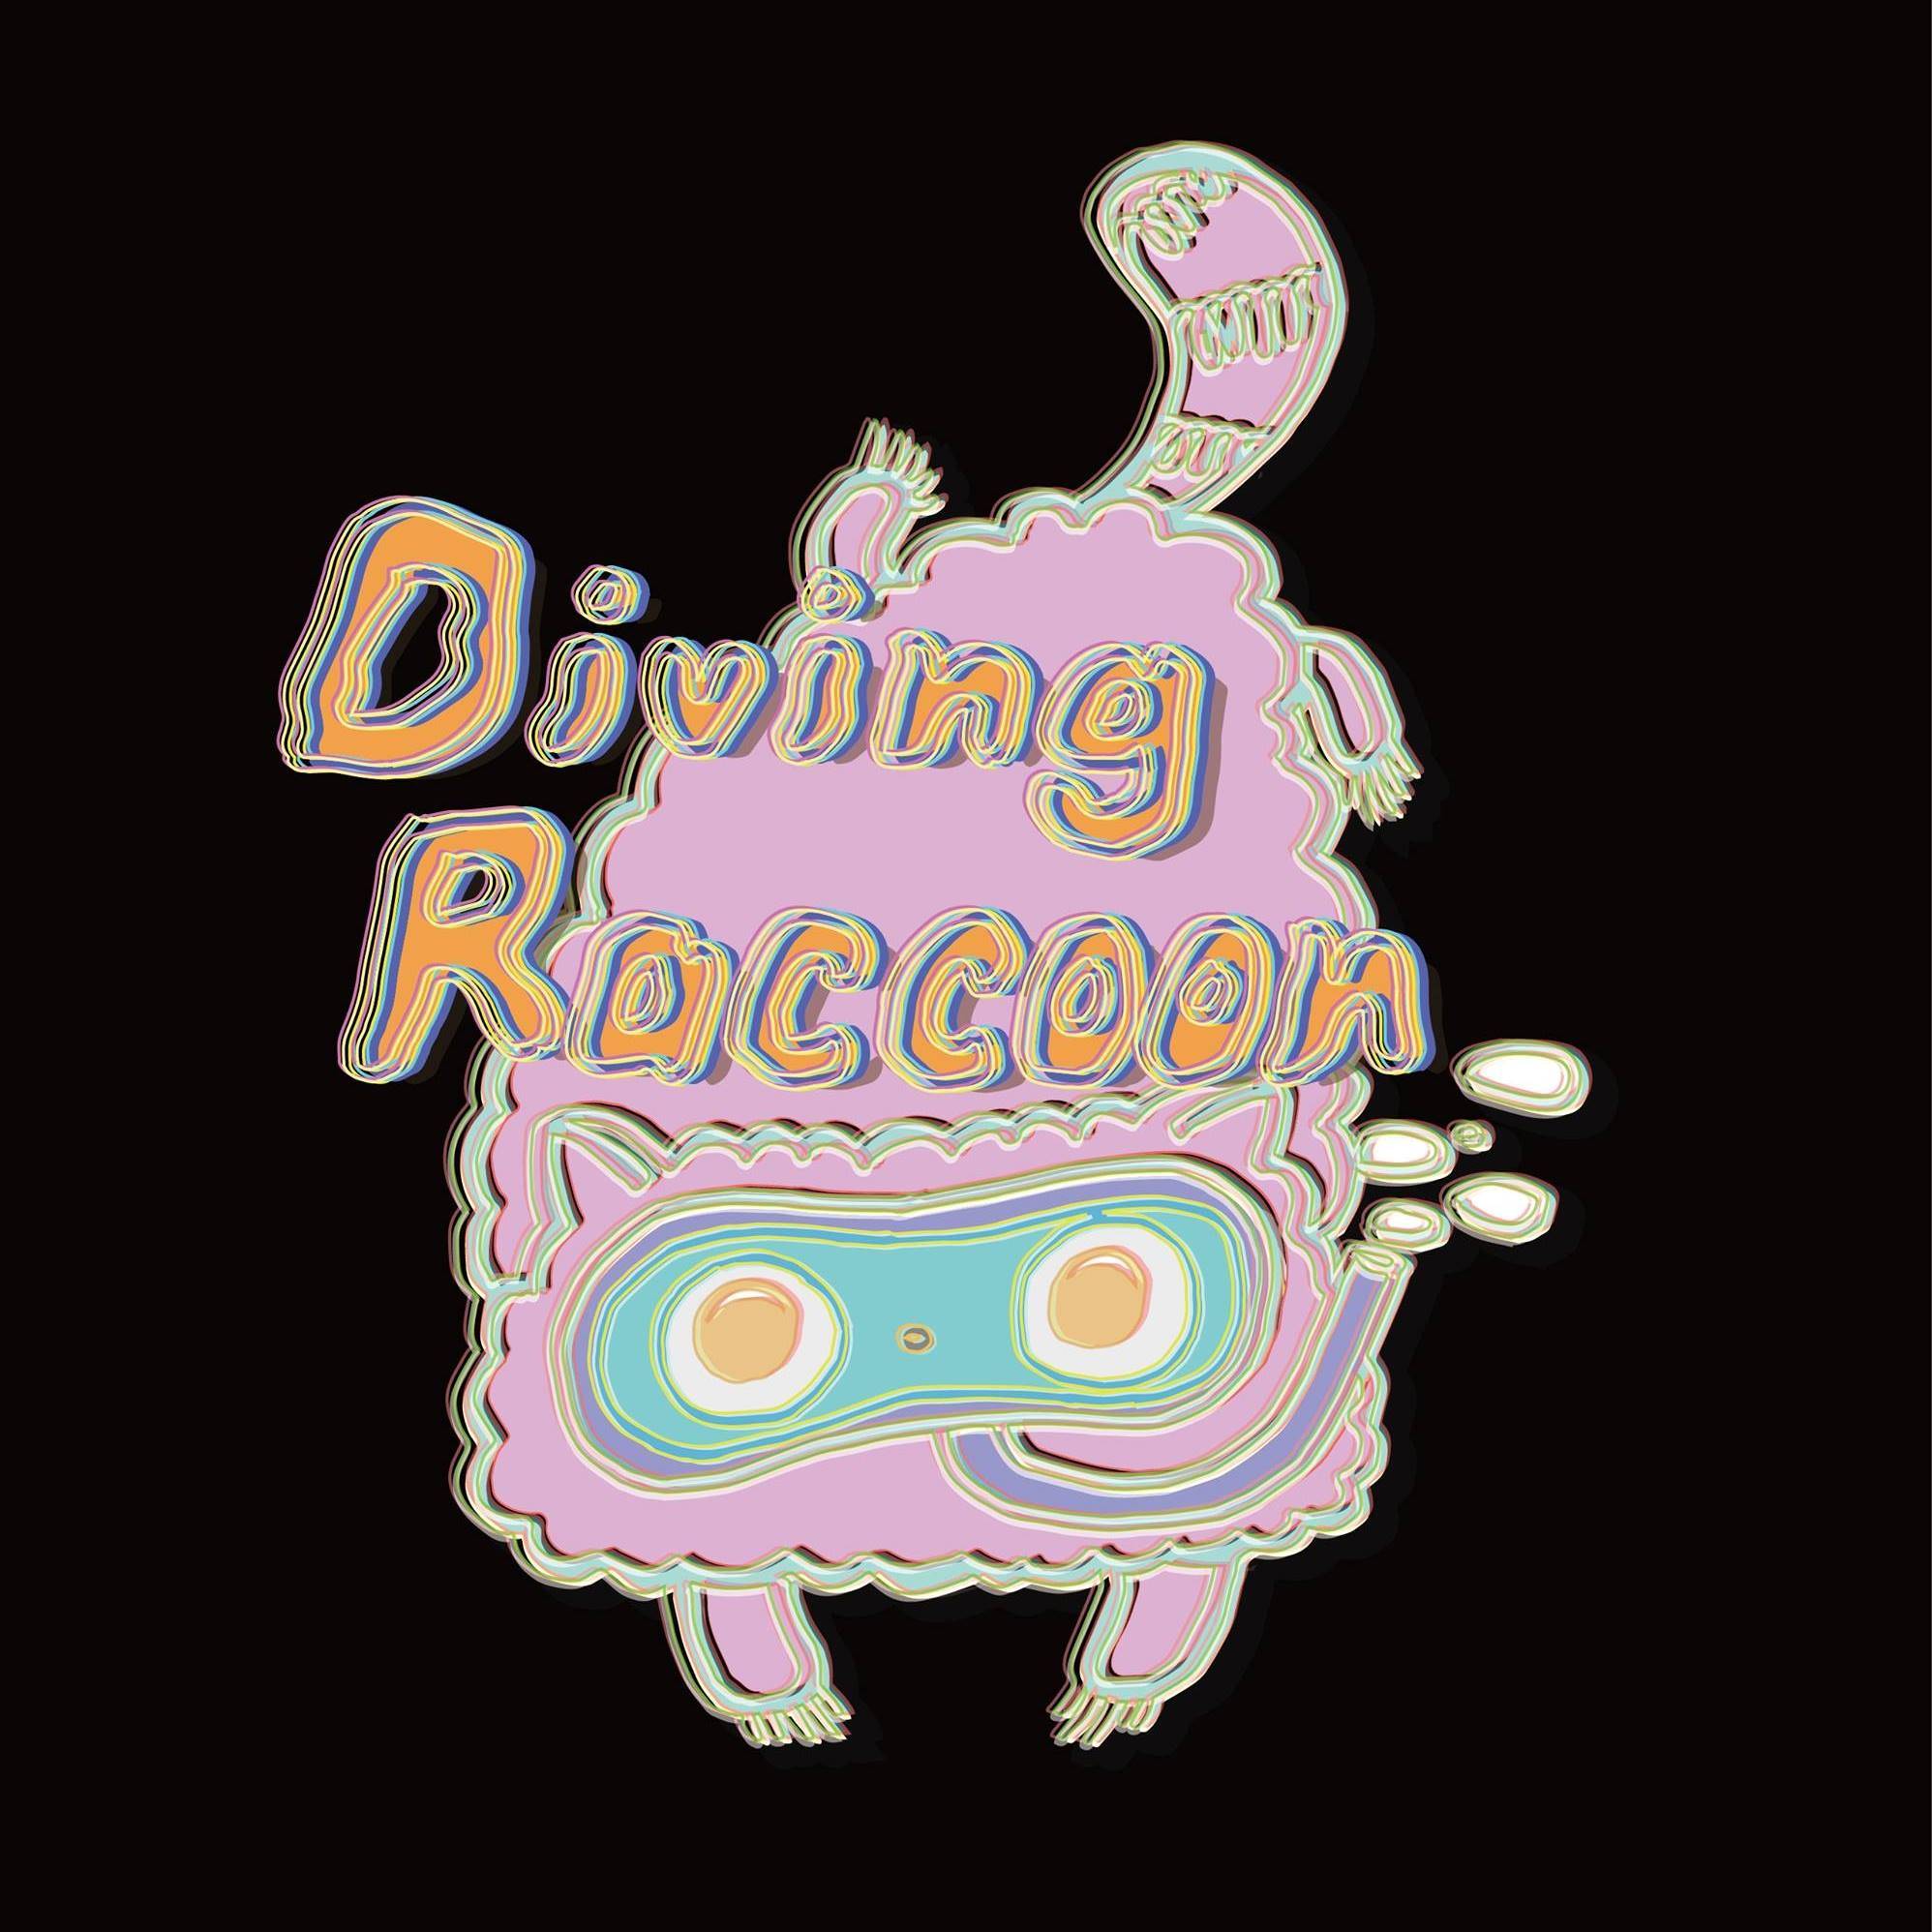 Diving Raccoon 潛水浣熊